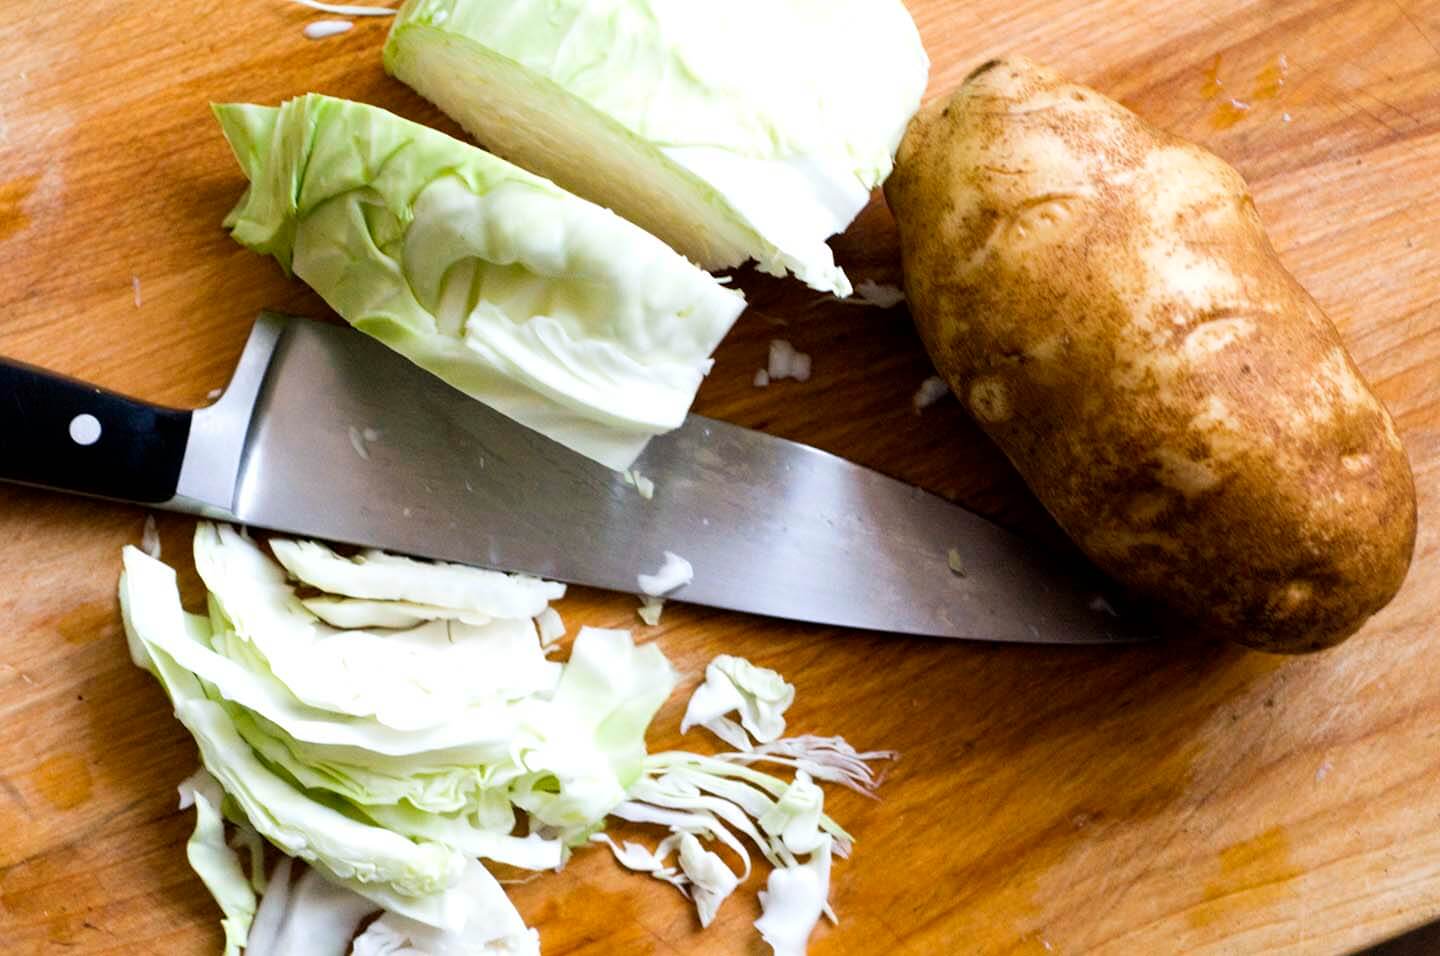 Sausage, potato, and cabbage skillet fry | Homesick Texan